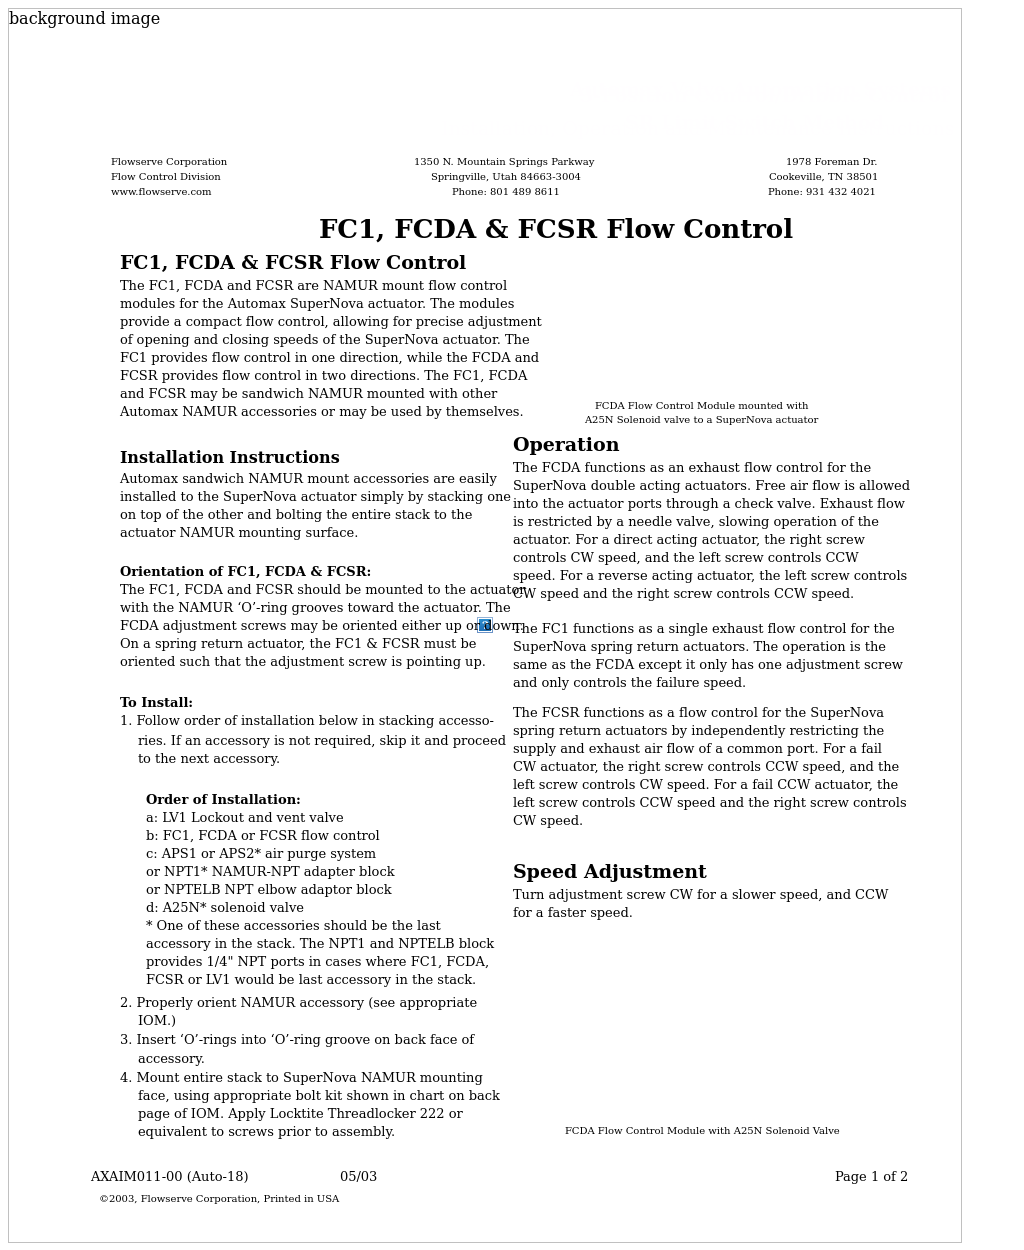 FC1 Flow Control